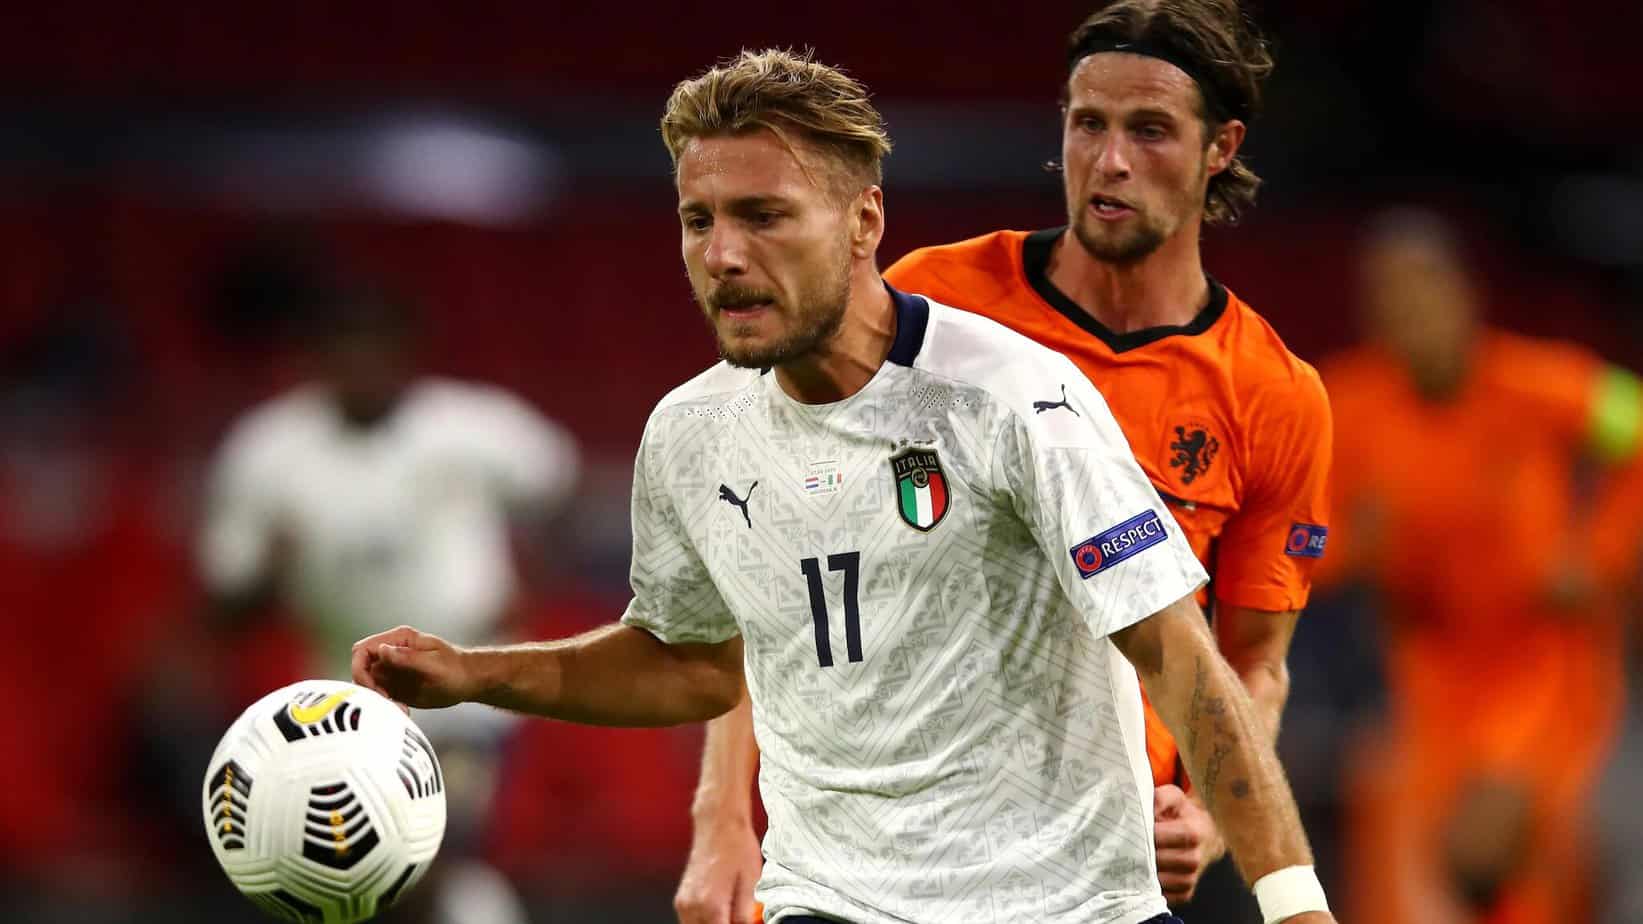 Terceiro lugar: Holanda x Itália nas apostas favoritas